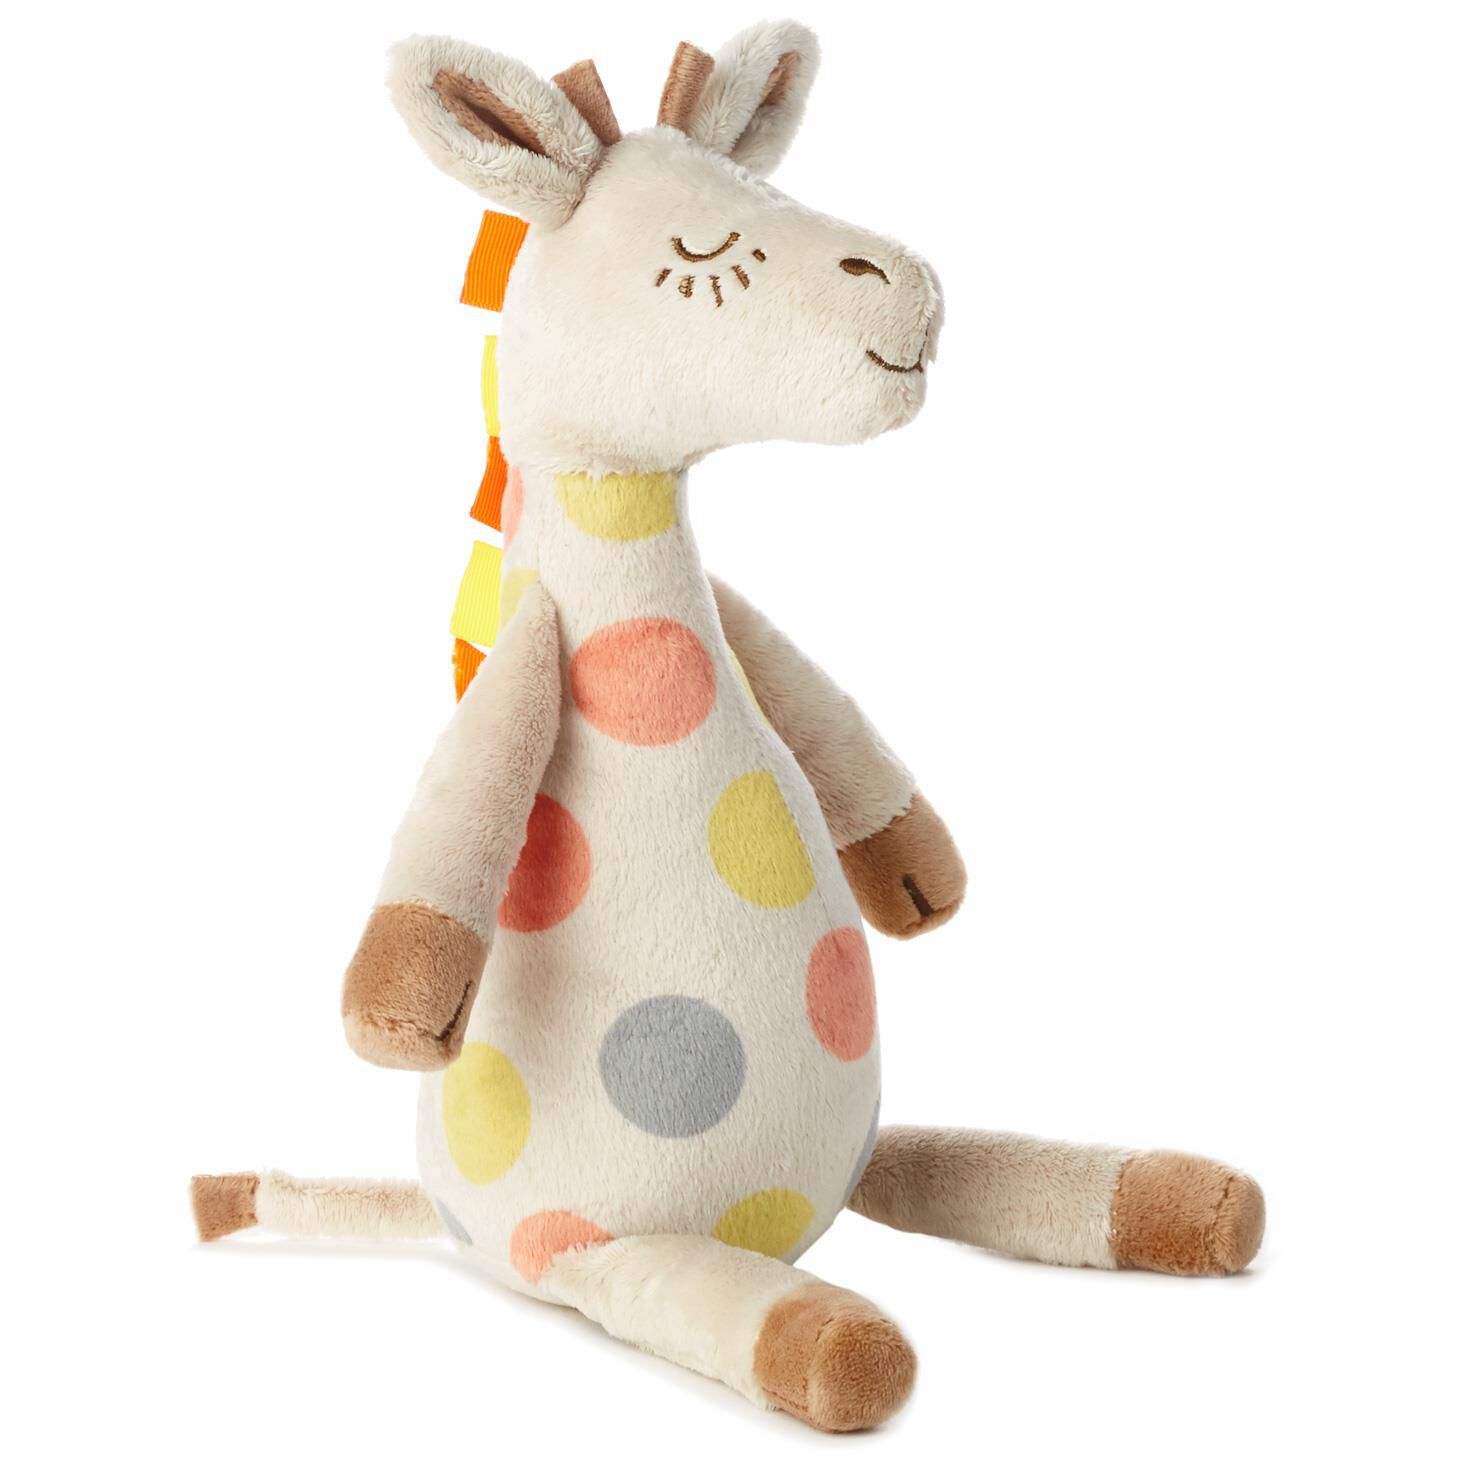 10ft giraffe stuffed animal